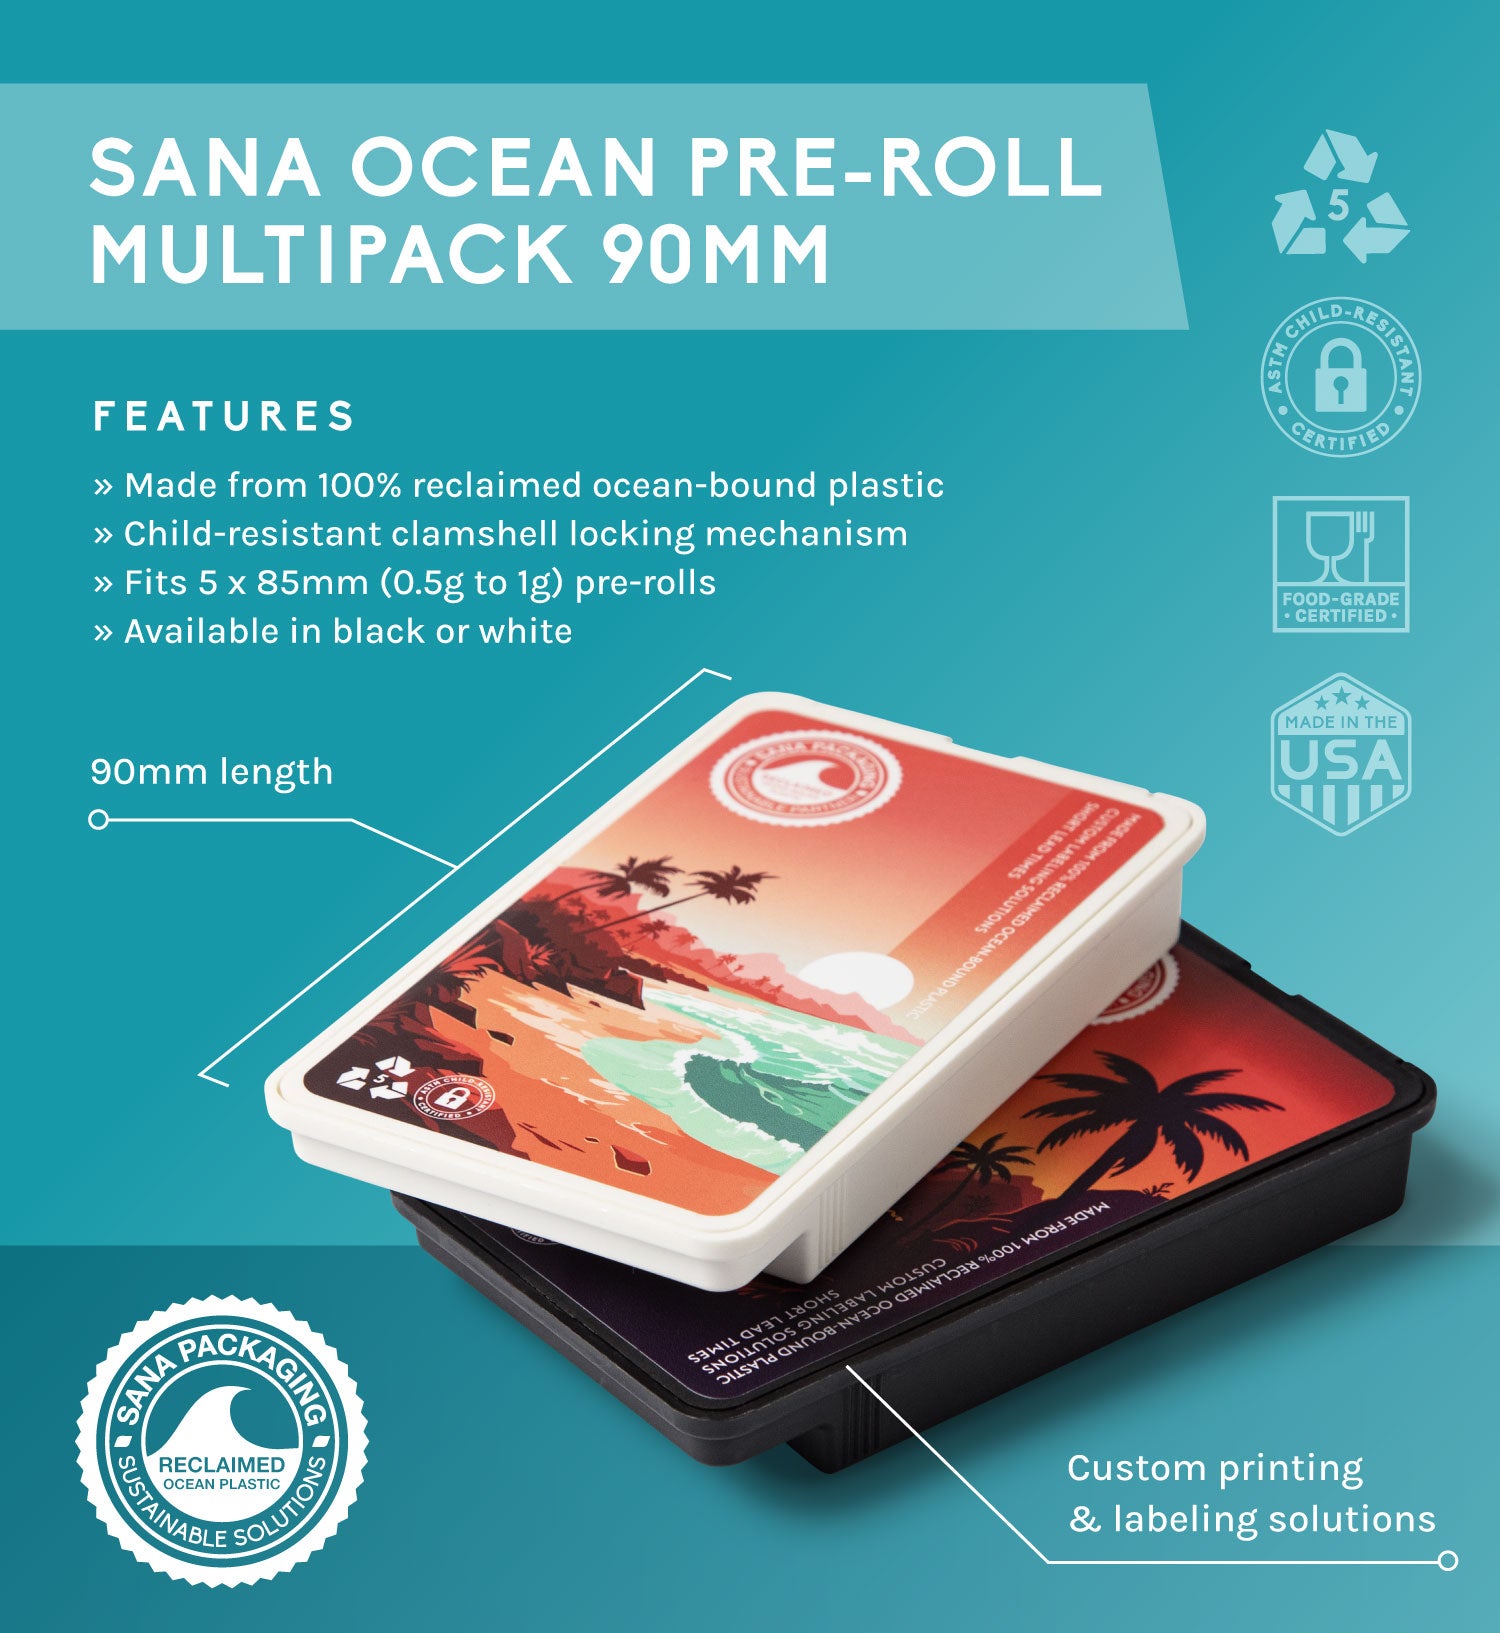 Sana Ocean Pre-Roll Multipack 90mm Infographic